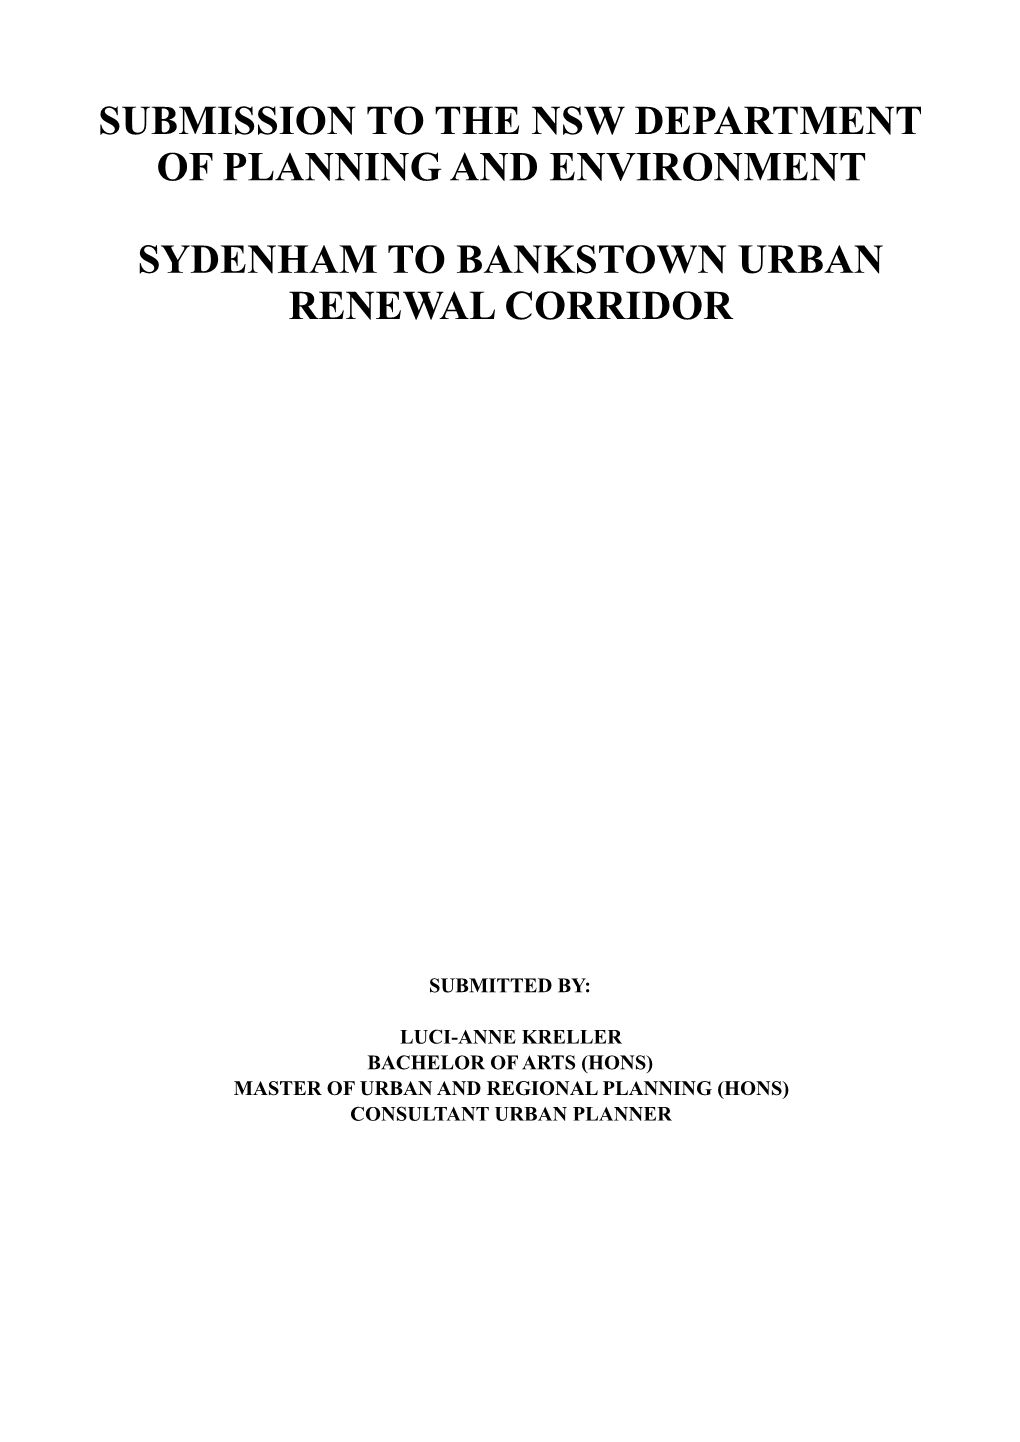 Sydenham to Bankstown Corridor Submission1 Copy